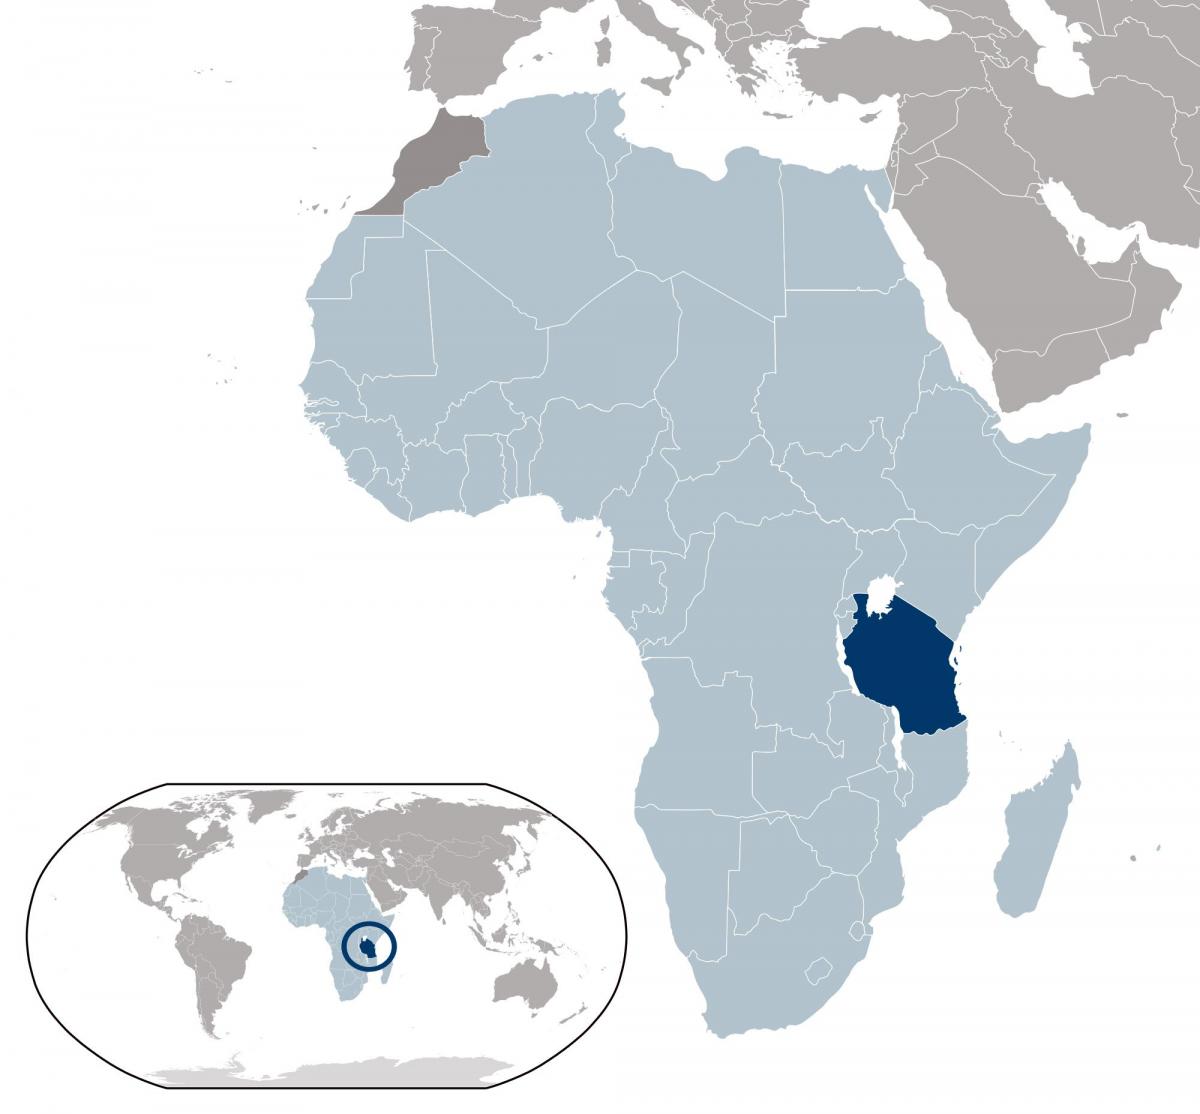 tanzania location map